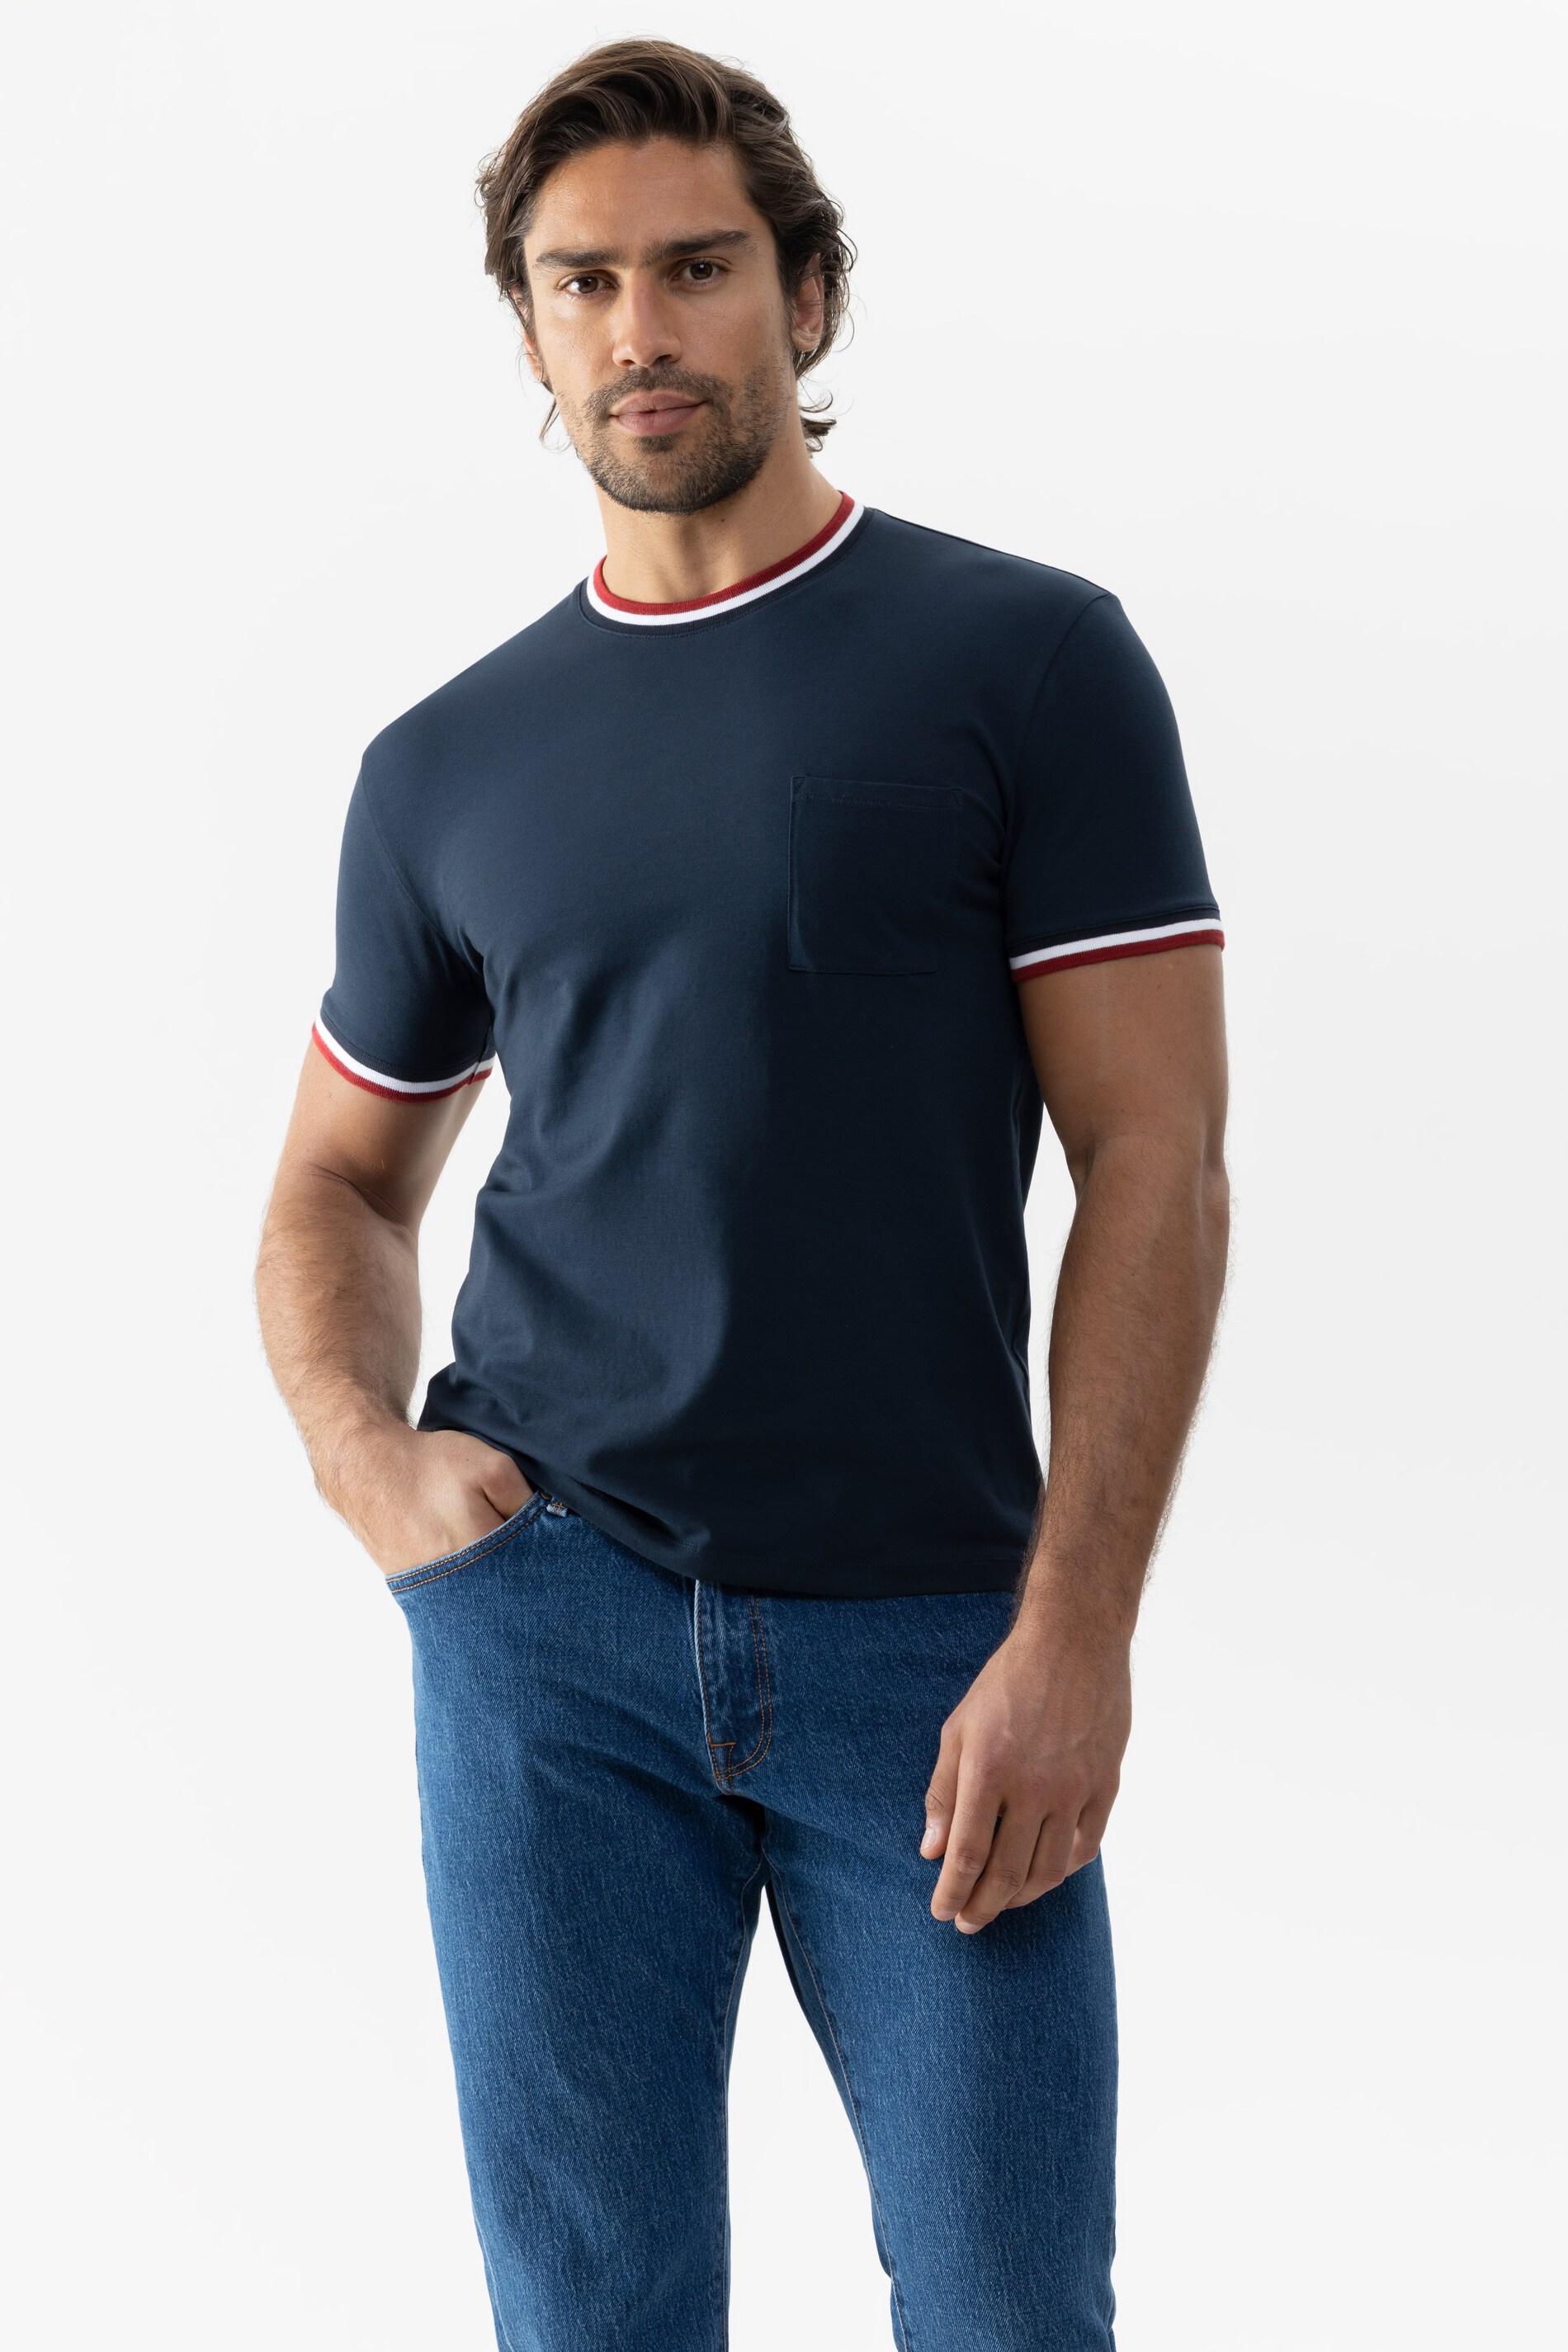 T-shirt Serie Relax Stripes Vooraanzicht | mey®